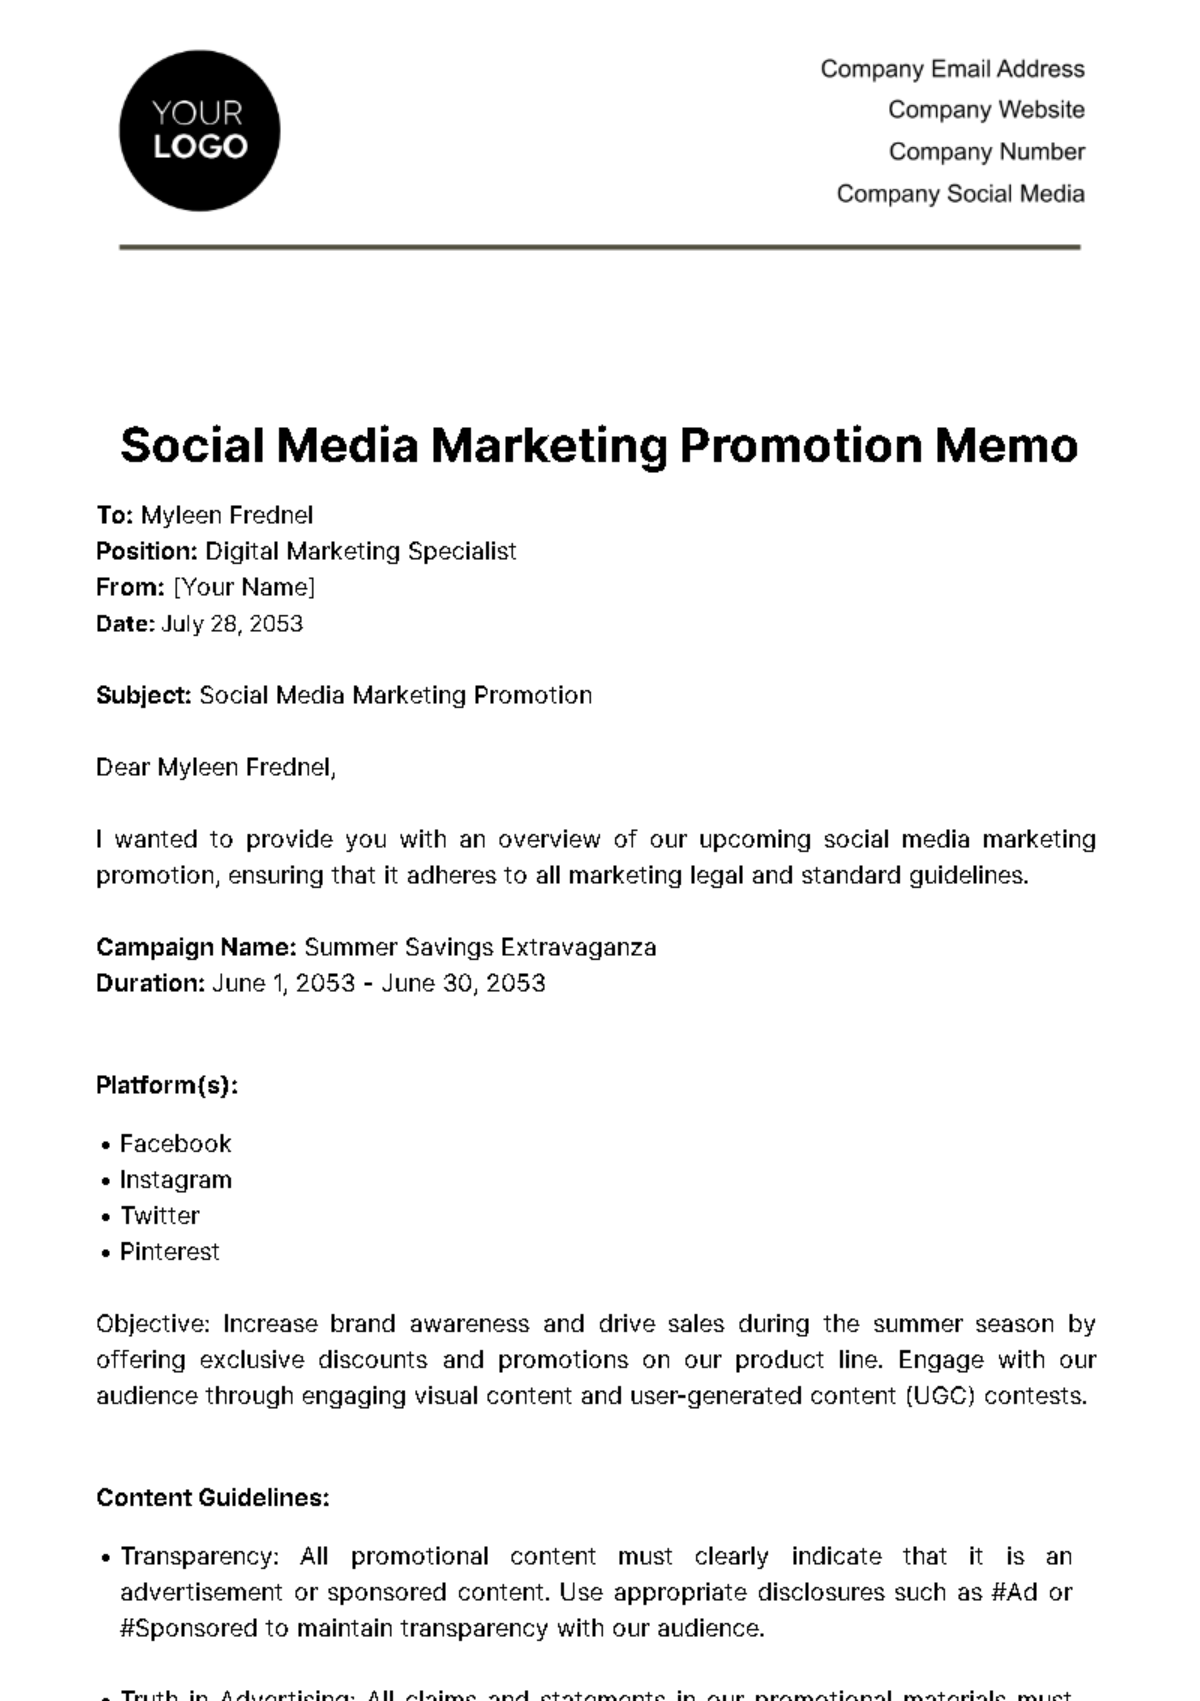 Social Media Marketing Promotion Memo Template